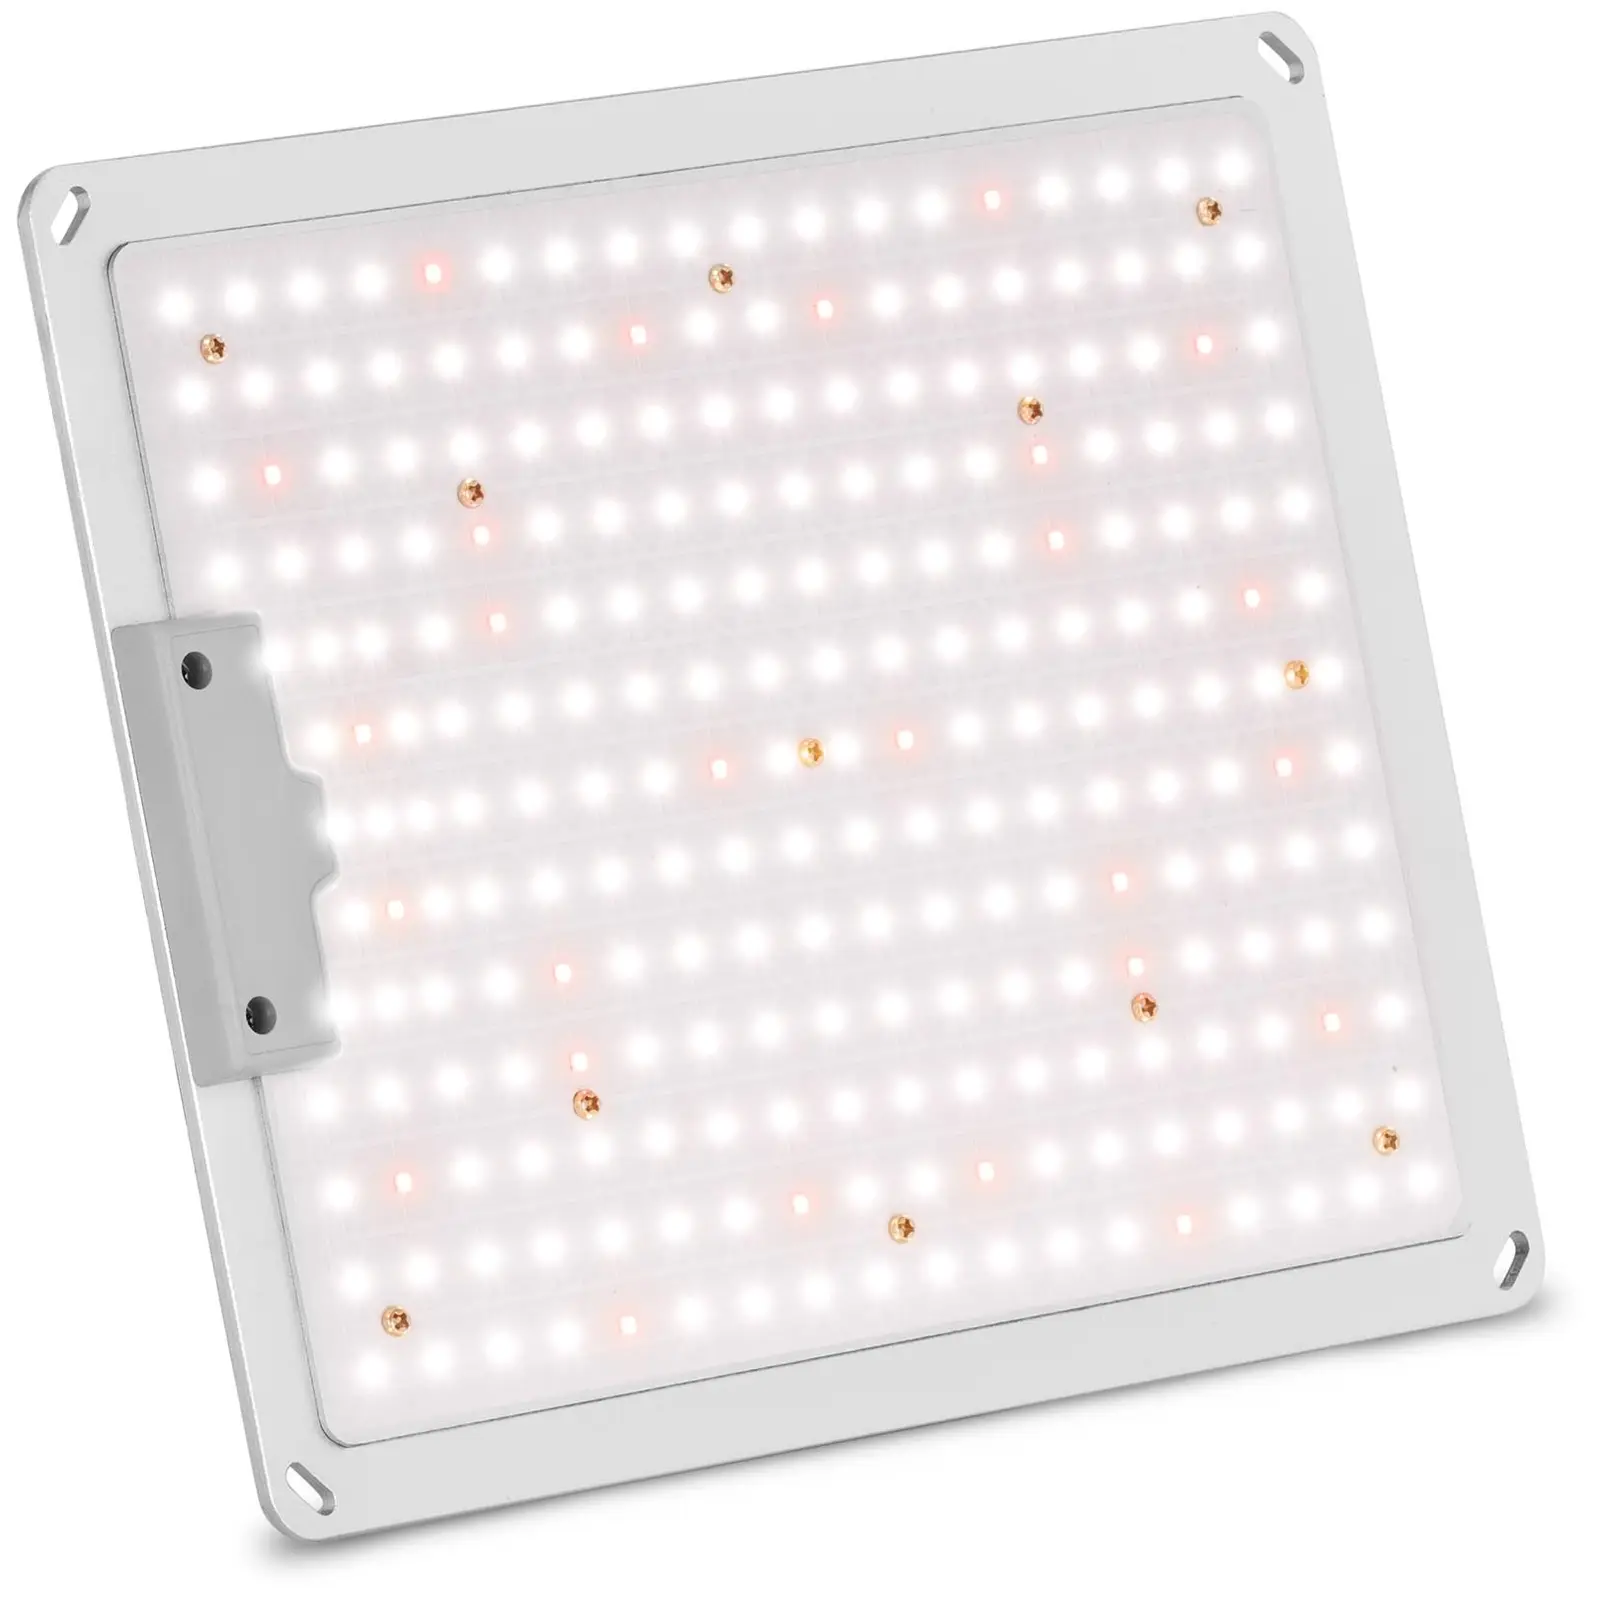 Kasvivalo - täysspektri - 110 W - 234 LED-valoa